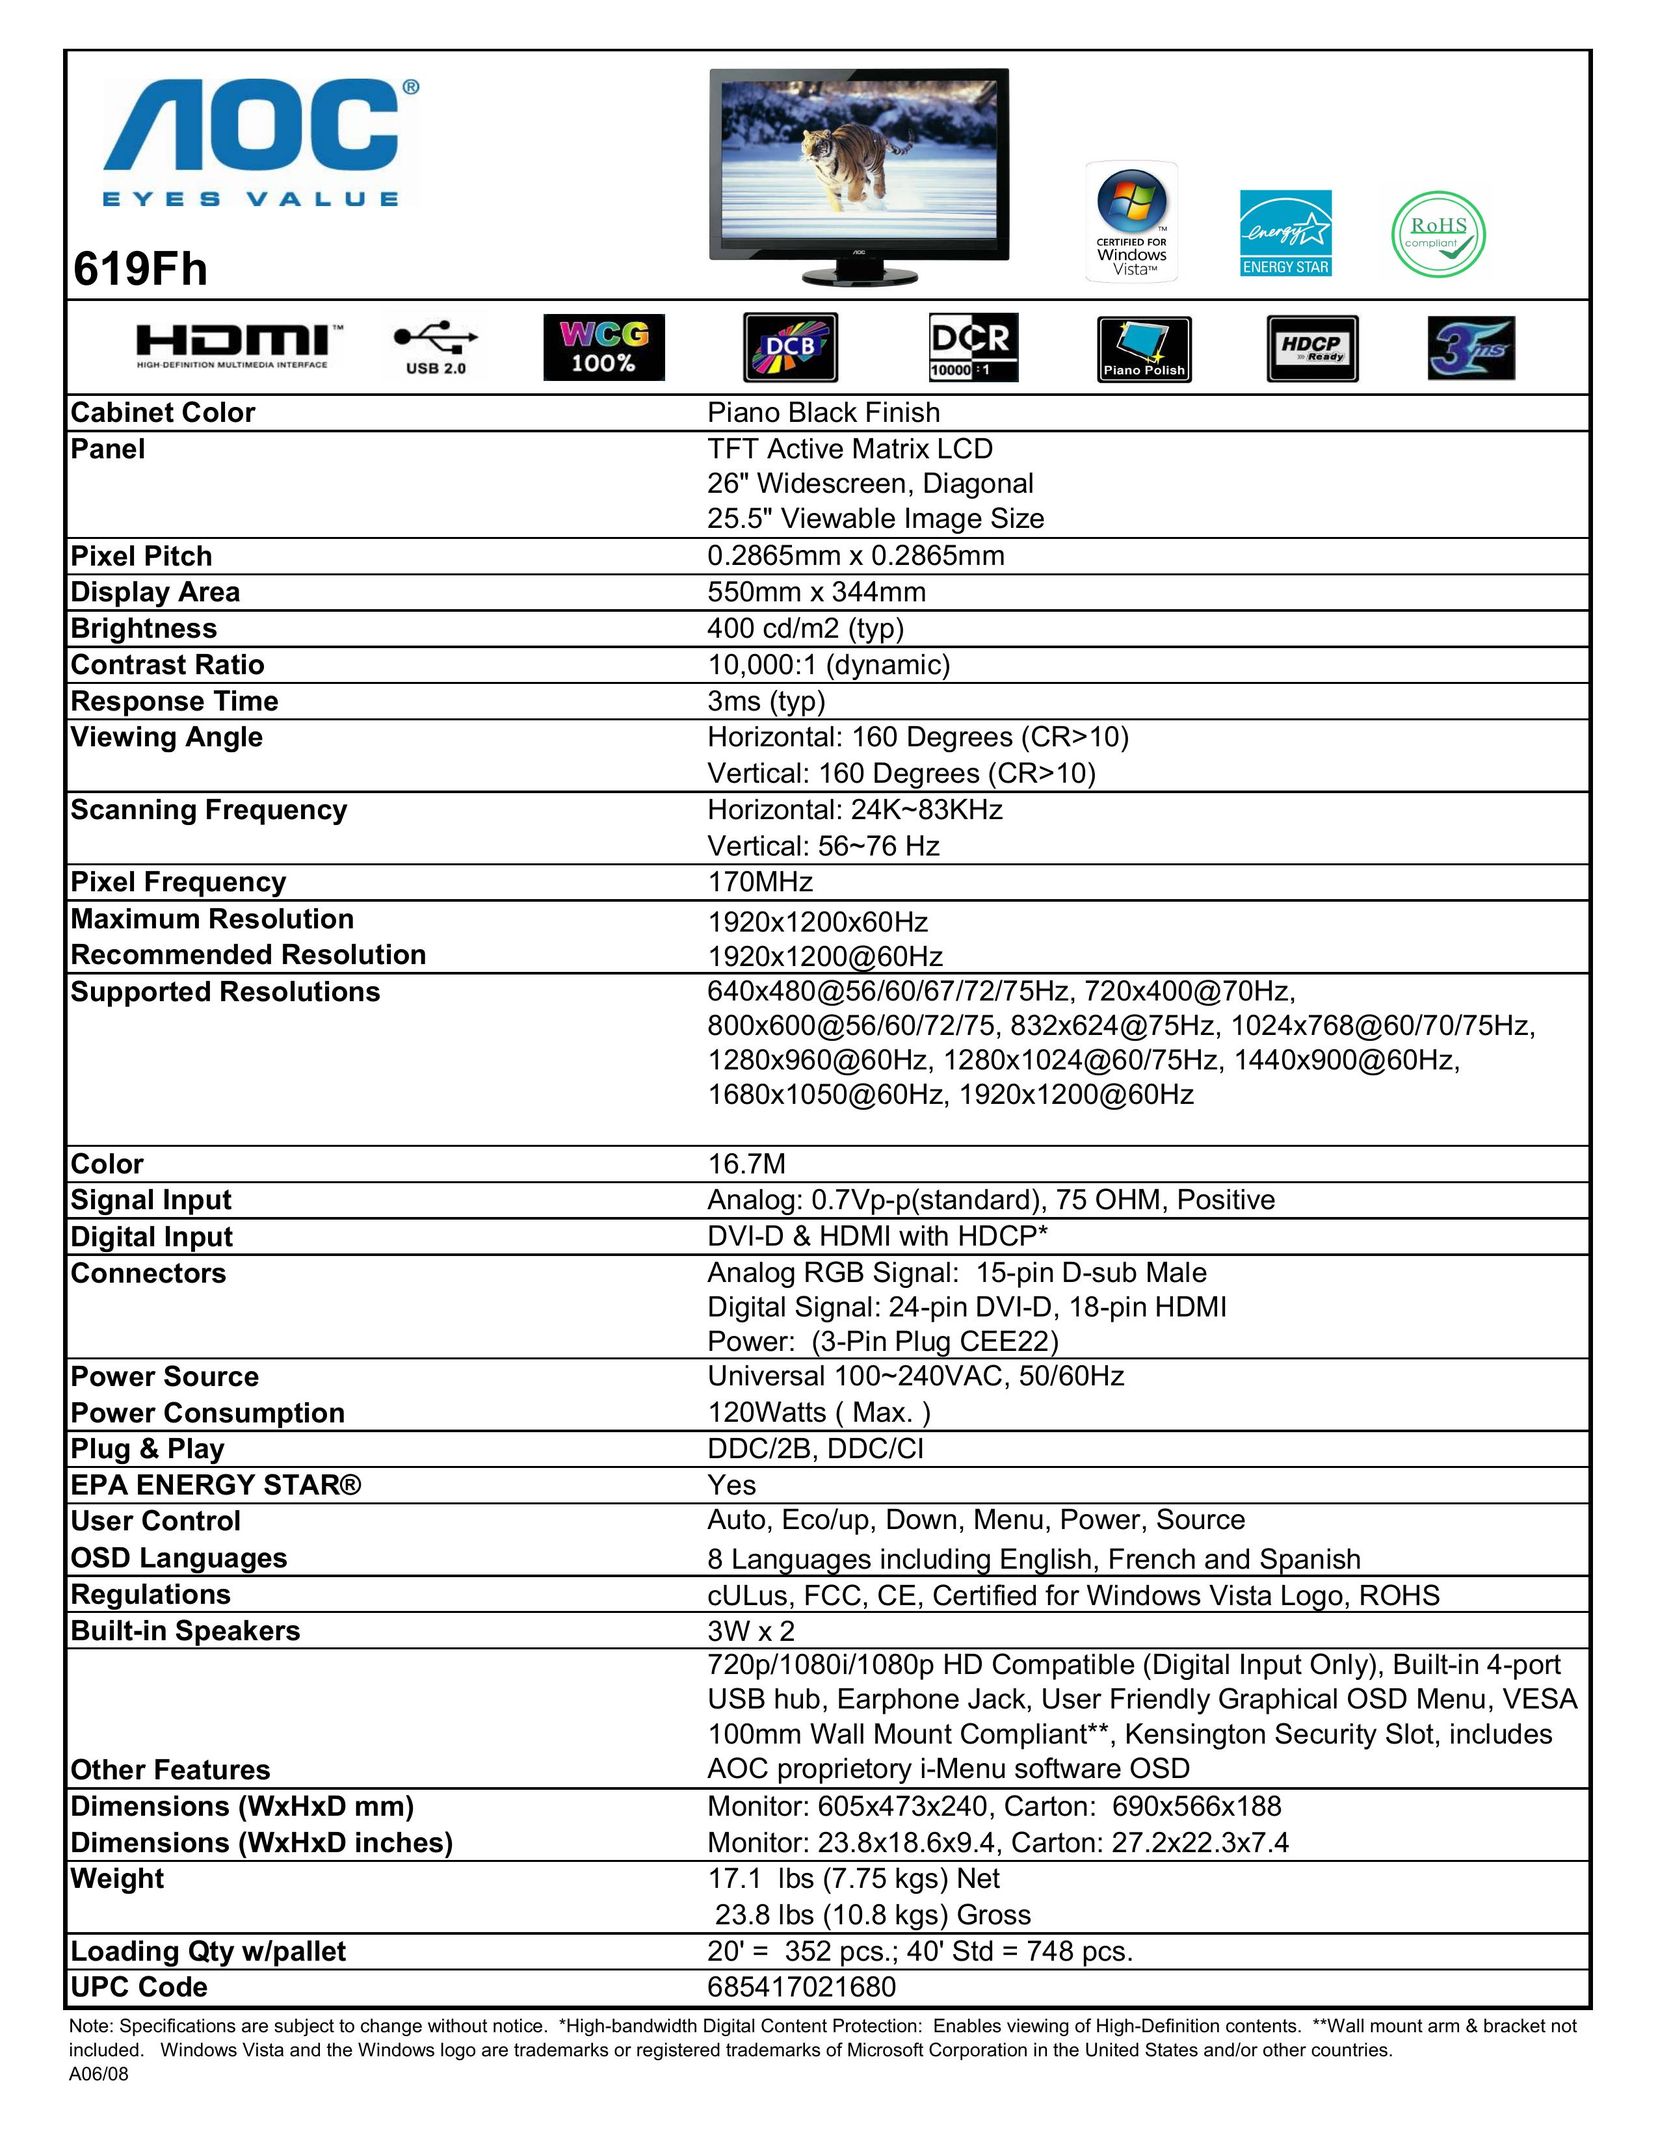 AOC 619Fh Flat Panel Television User Manual